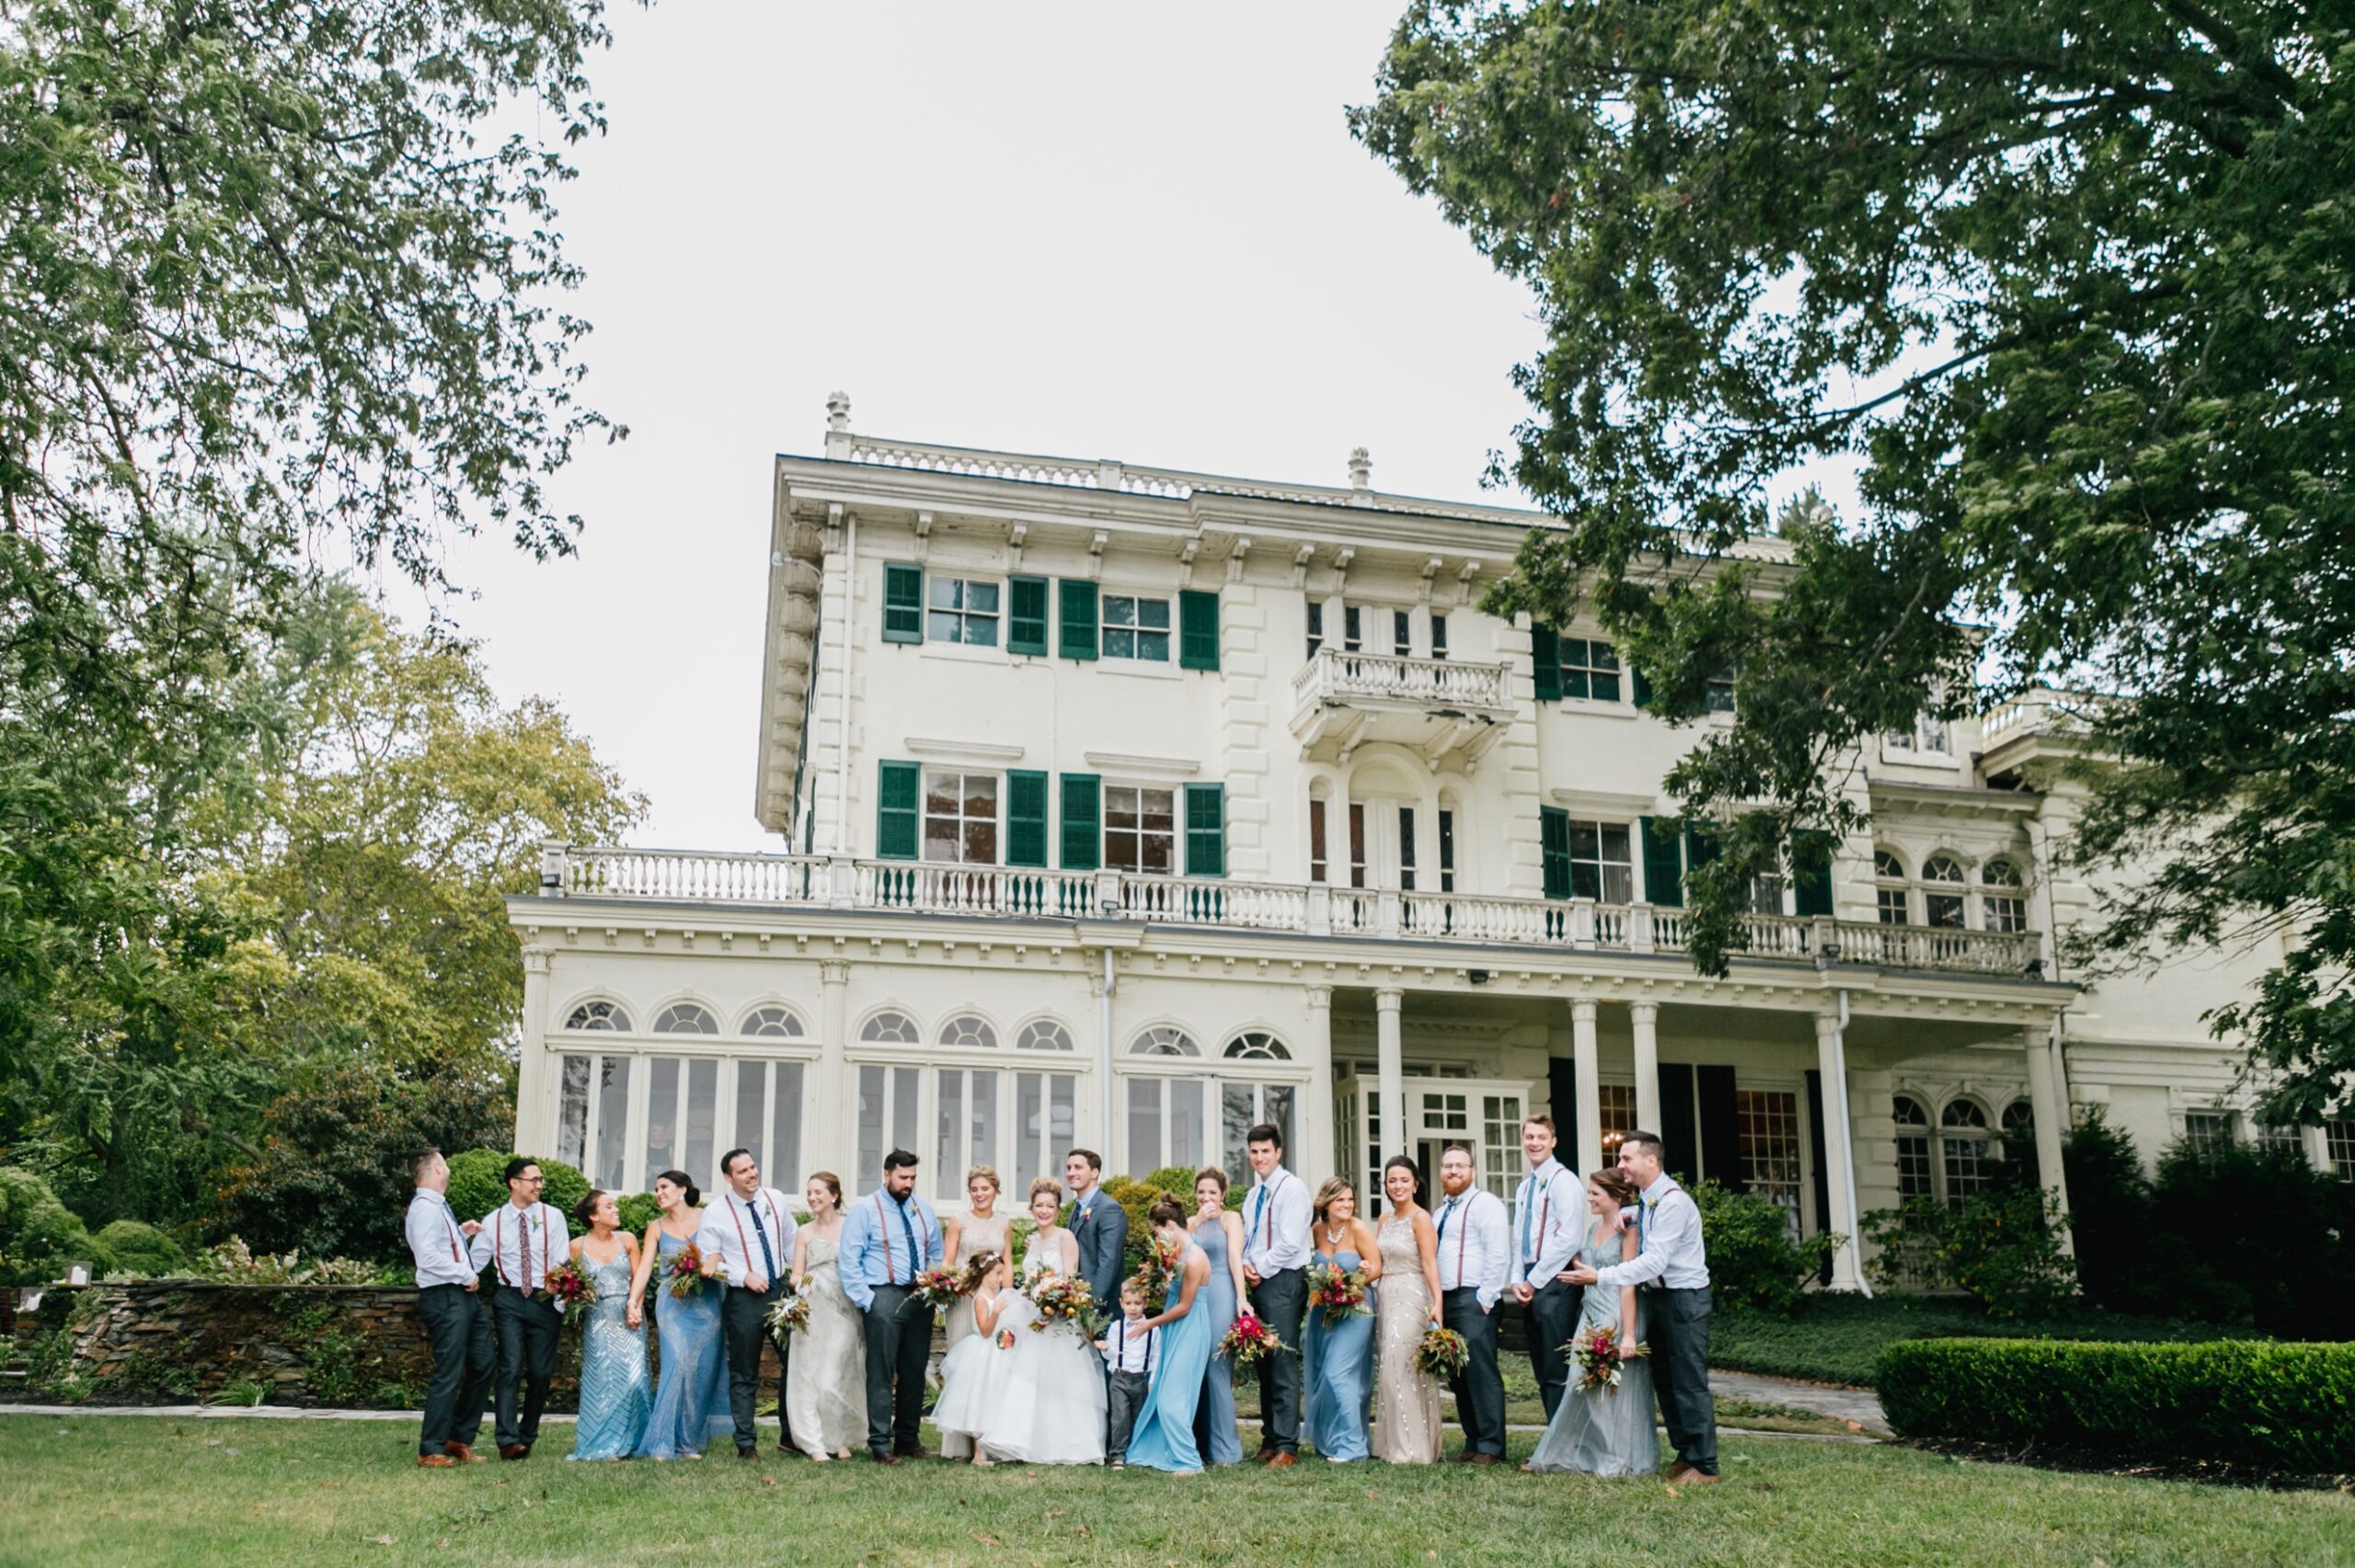 Wedding party at an estate wedding near Philadelphia